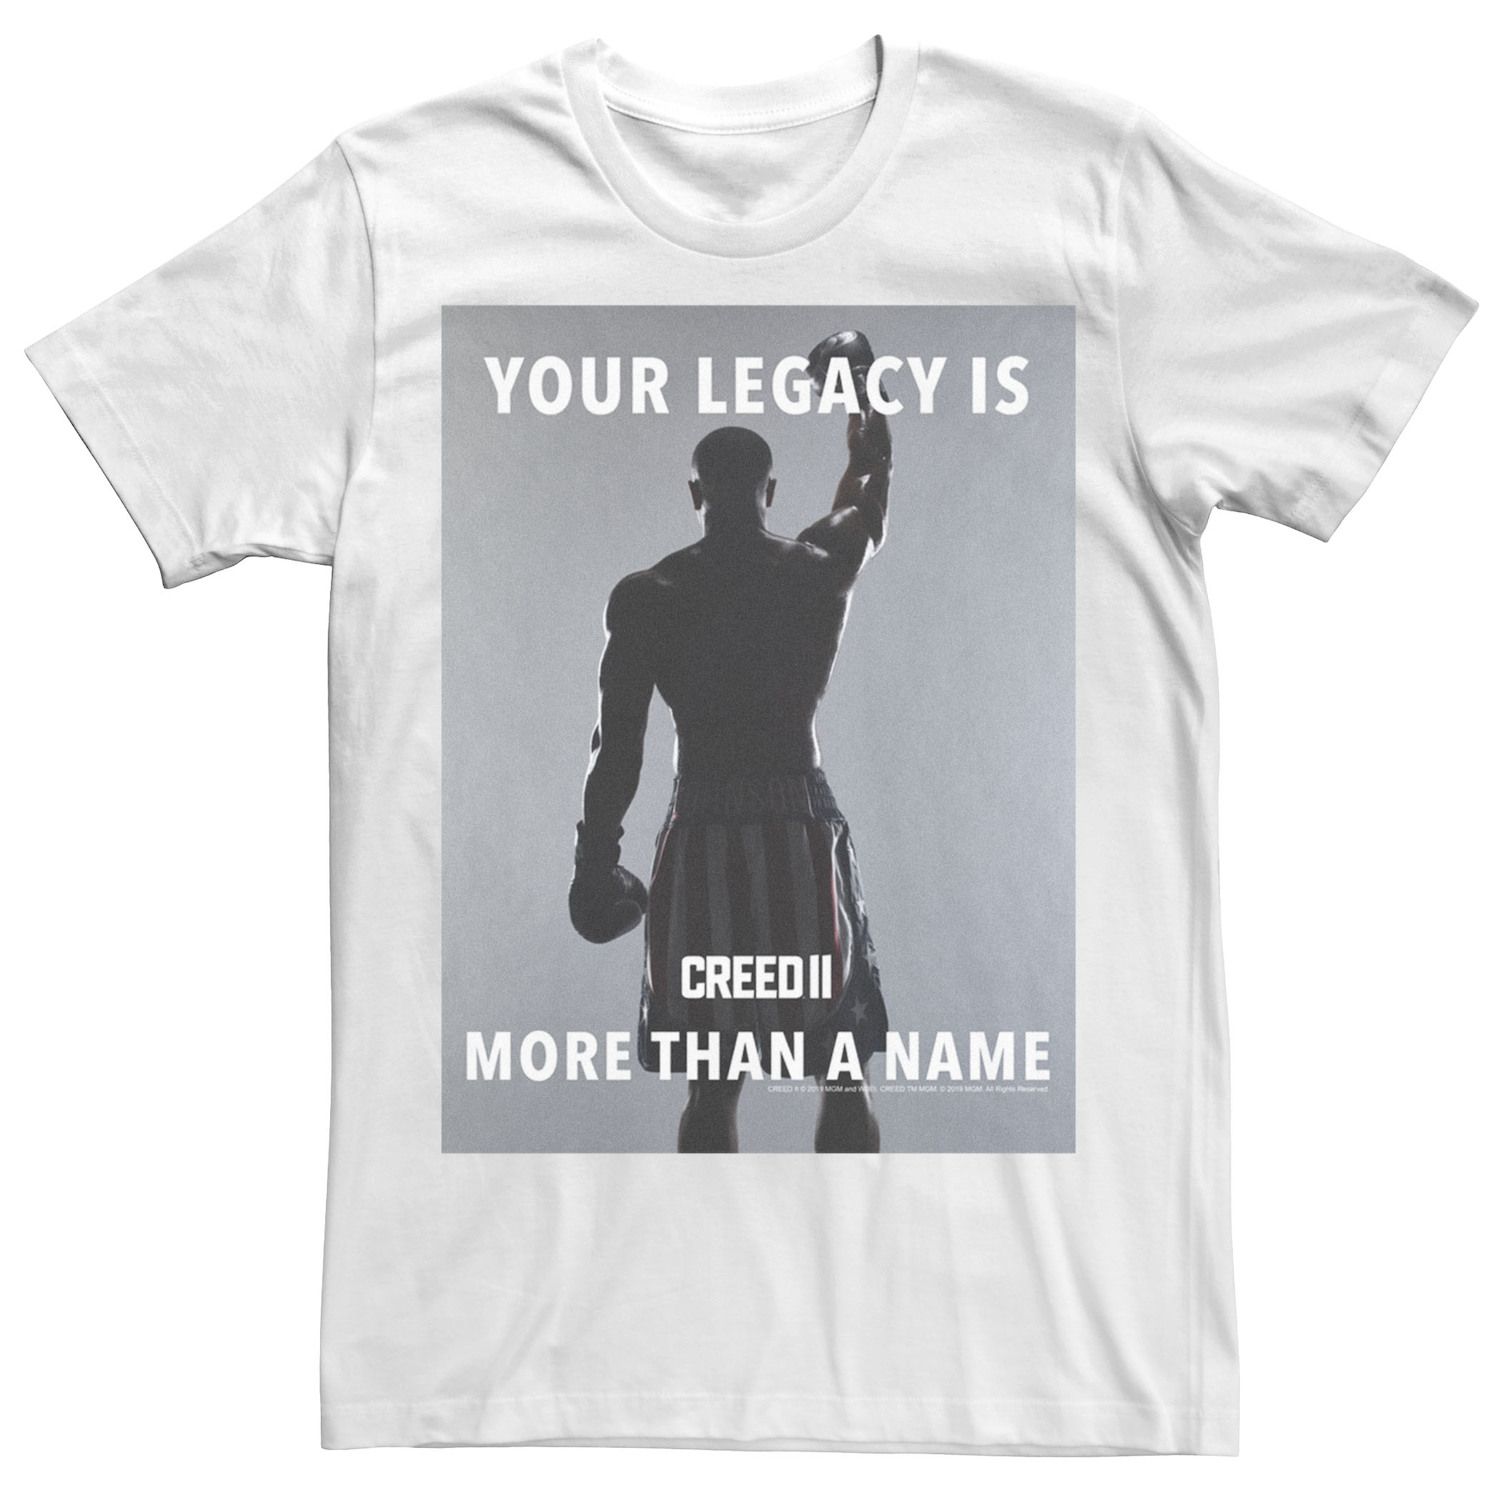 Мужская футболка Creed 2 Creed 2 Legacy с плакатом Licensed Character